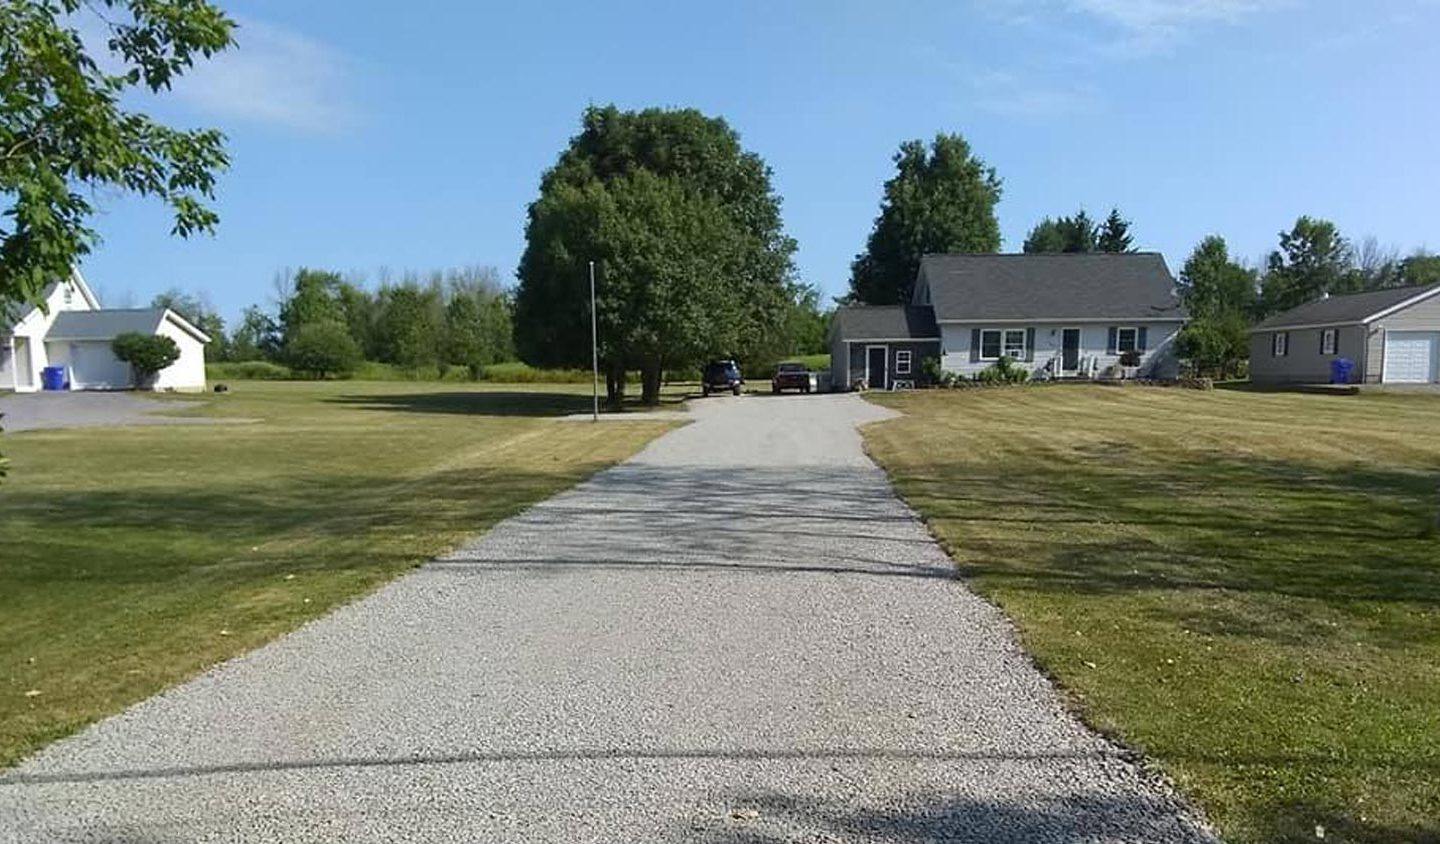 grey gravel driveway between green grass during daytime